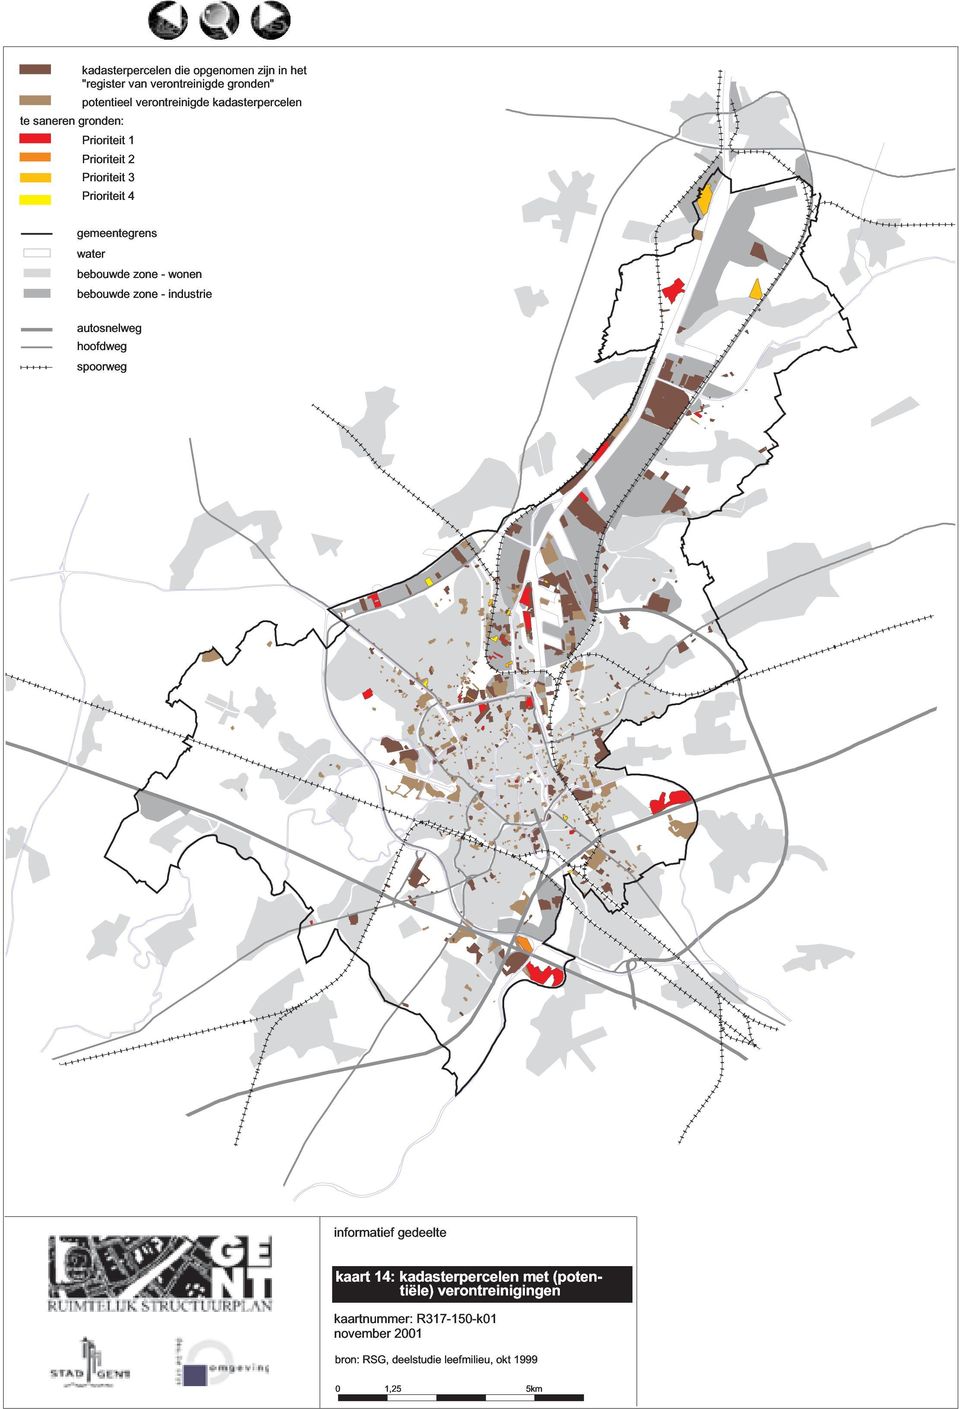 zone - wonen bebouwde zone - industrie autosnelweg hoofdweg spoorweg informatief gedeelte kaart 14: kadasterpercelen